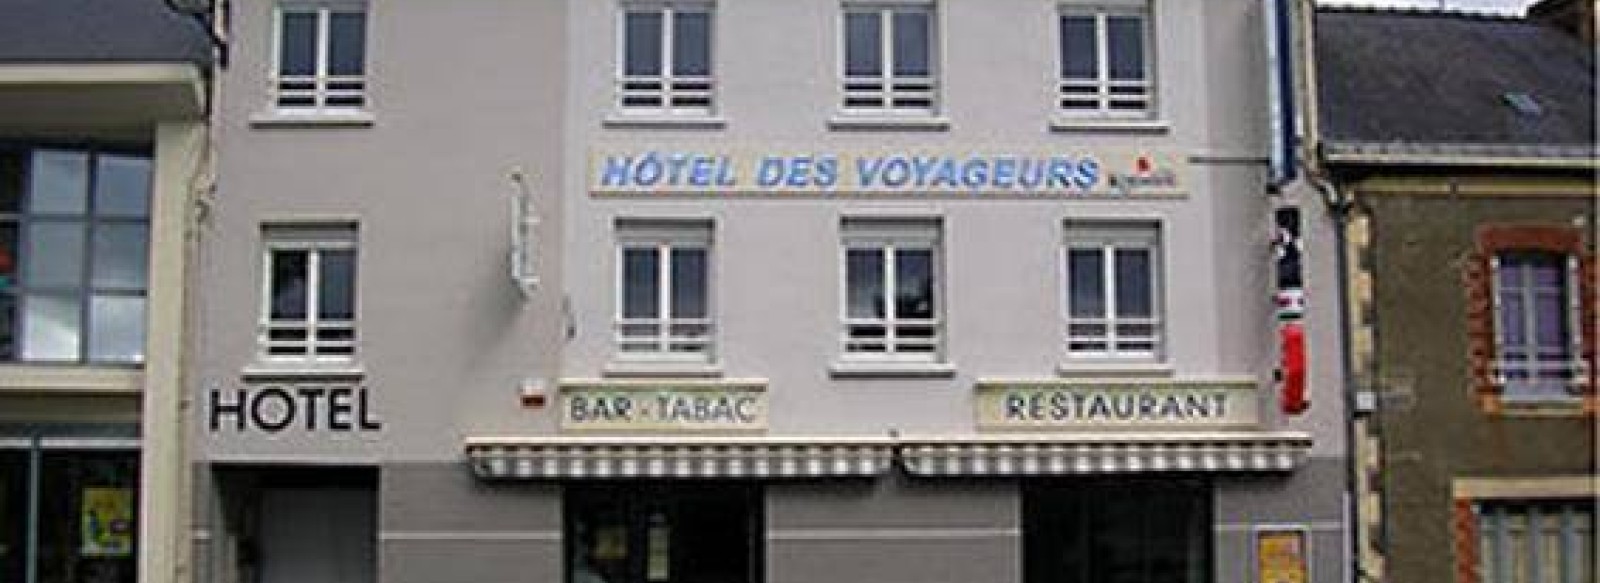 HOTEL DES VOYAGEURS